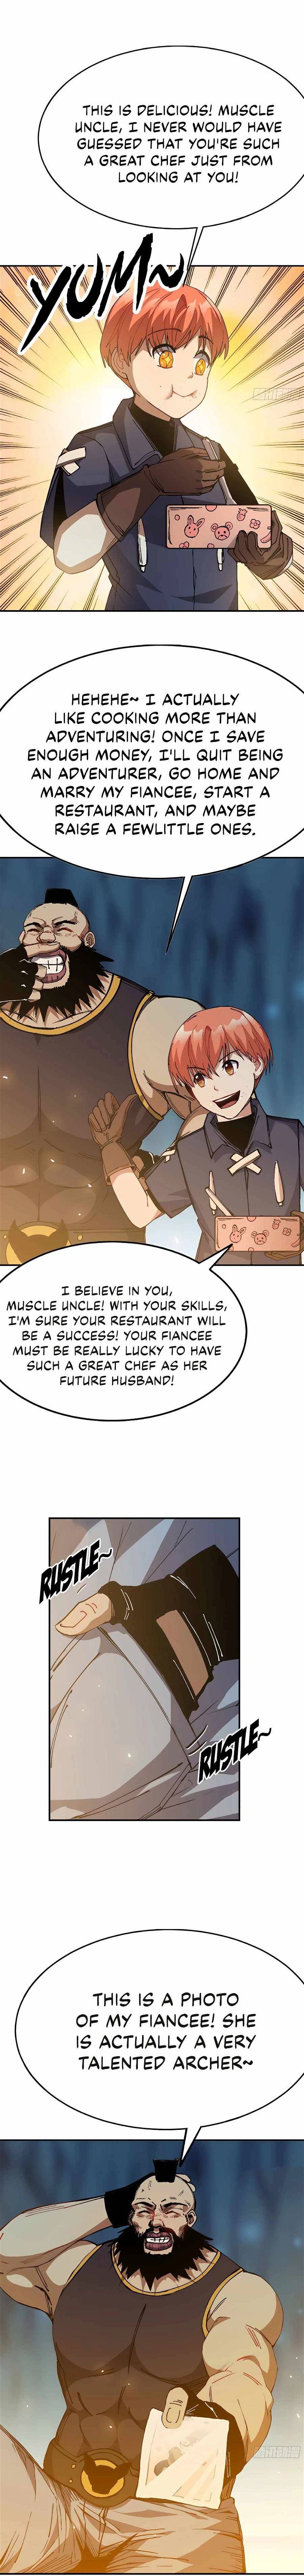 Mushroom Hero Chapter 64 page 8